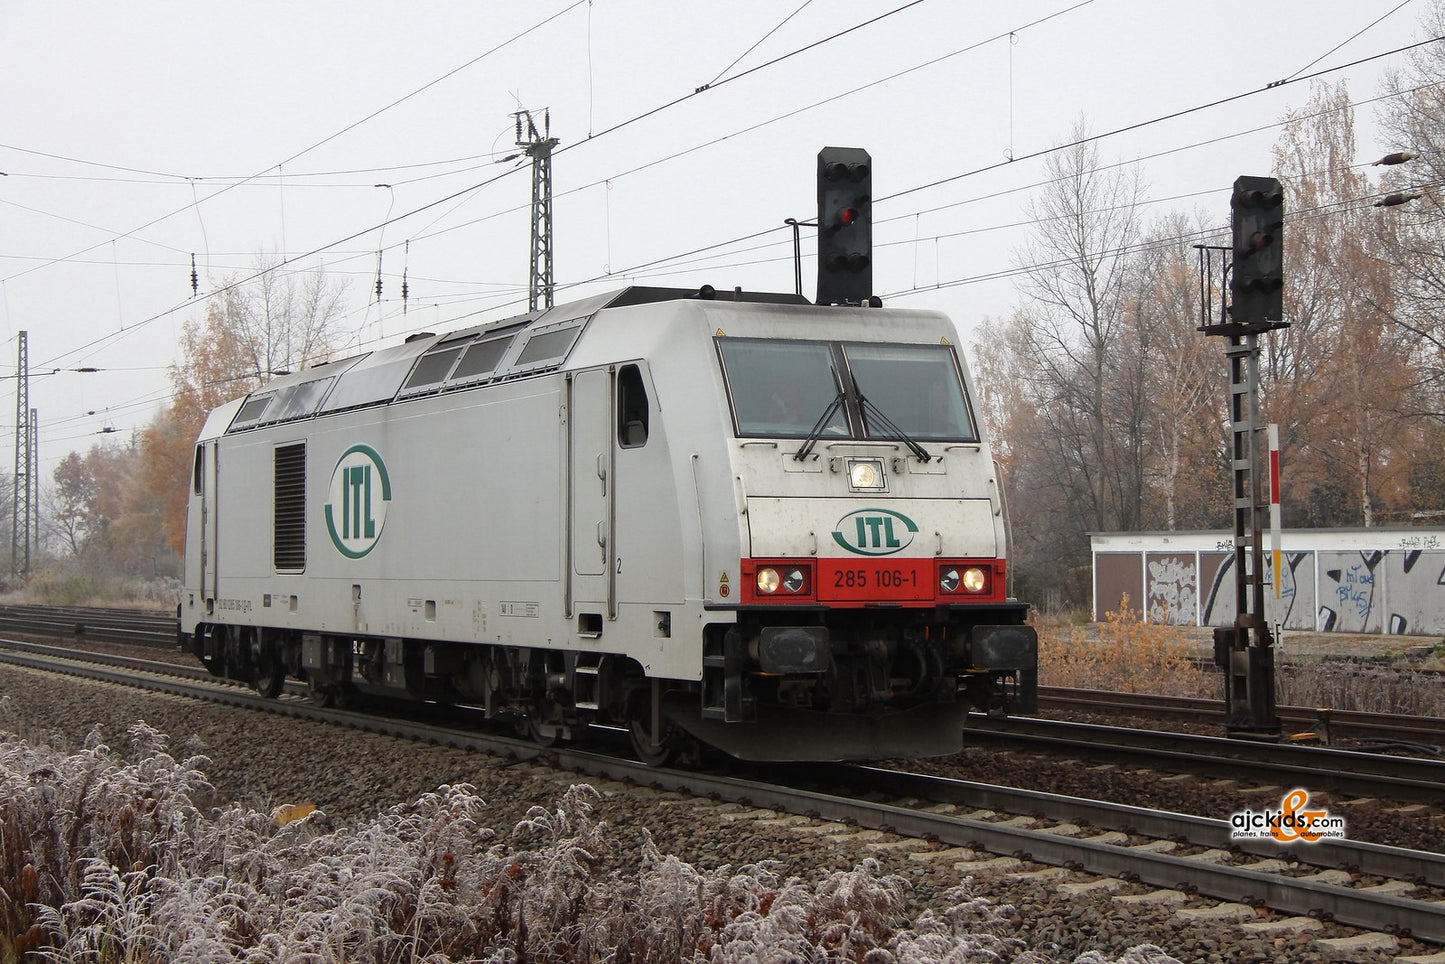 Marklin 36653 - Diesel Locomotive CB Rail class 285